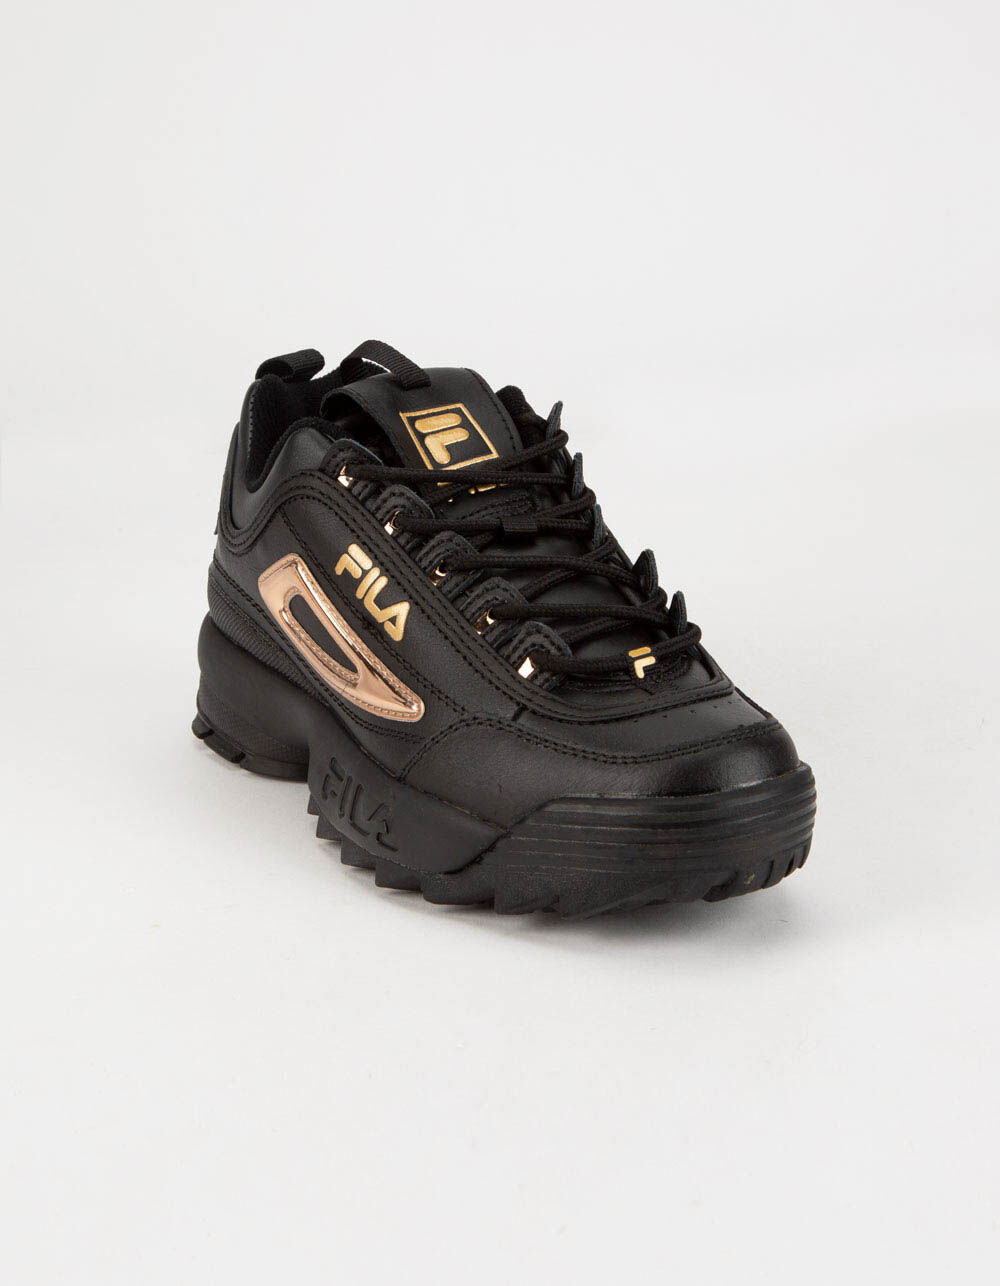 FILA Disruptor II Metallic Accent Black & Womens Shoes - BLACK/GOLD |